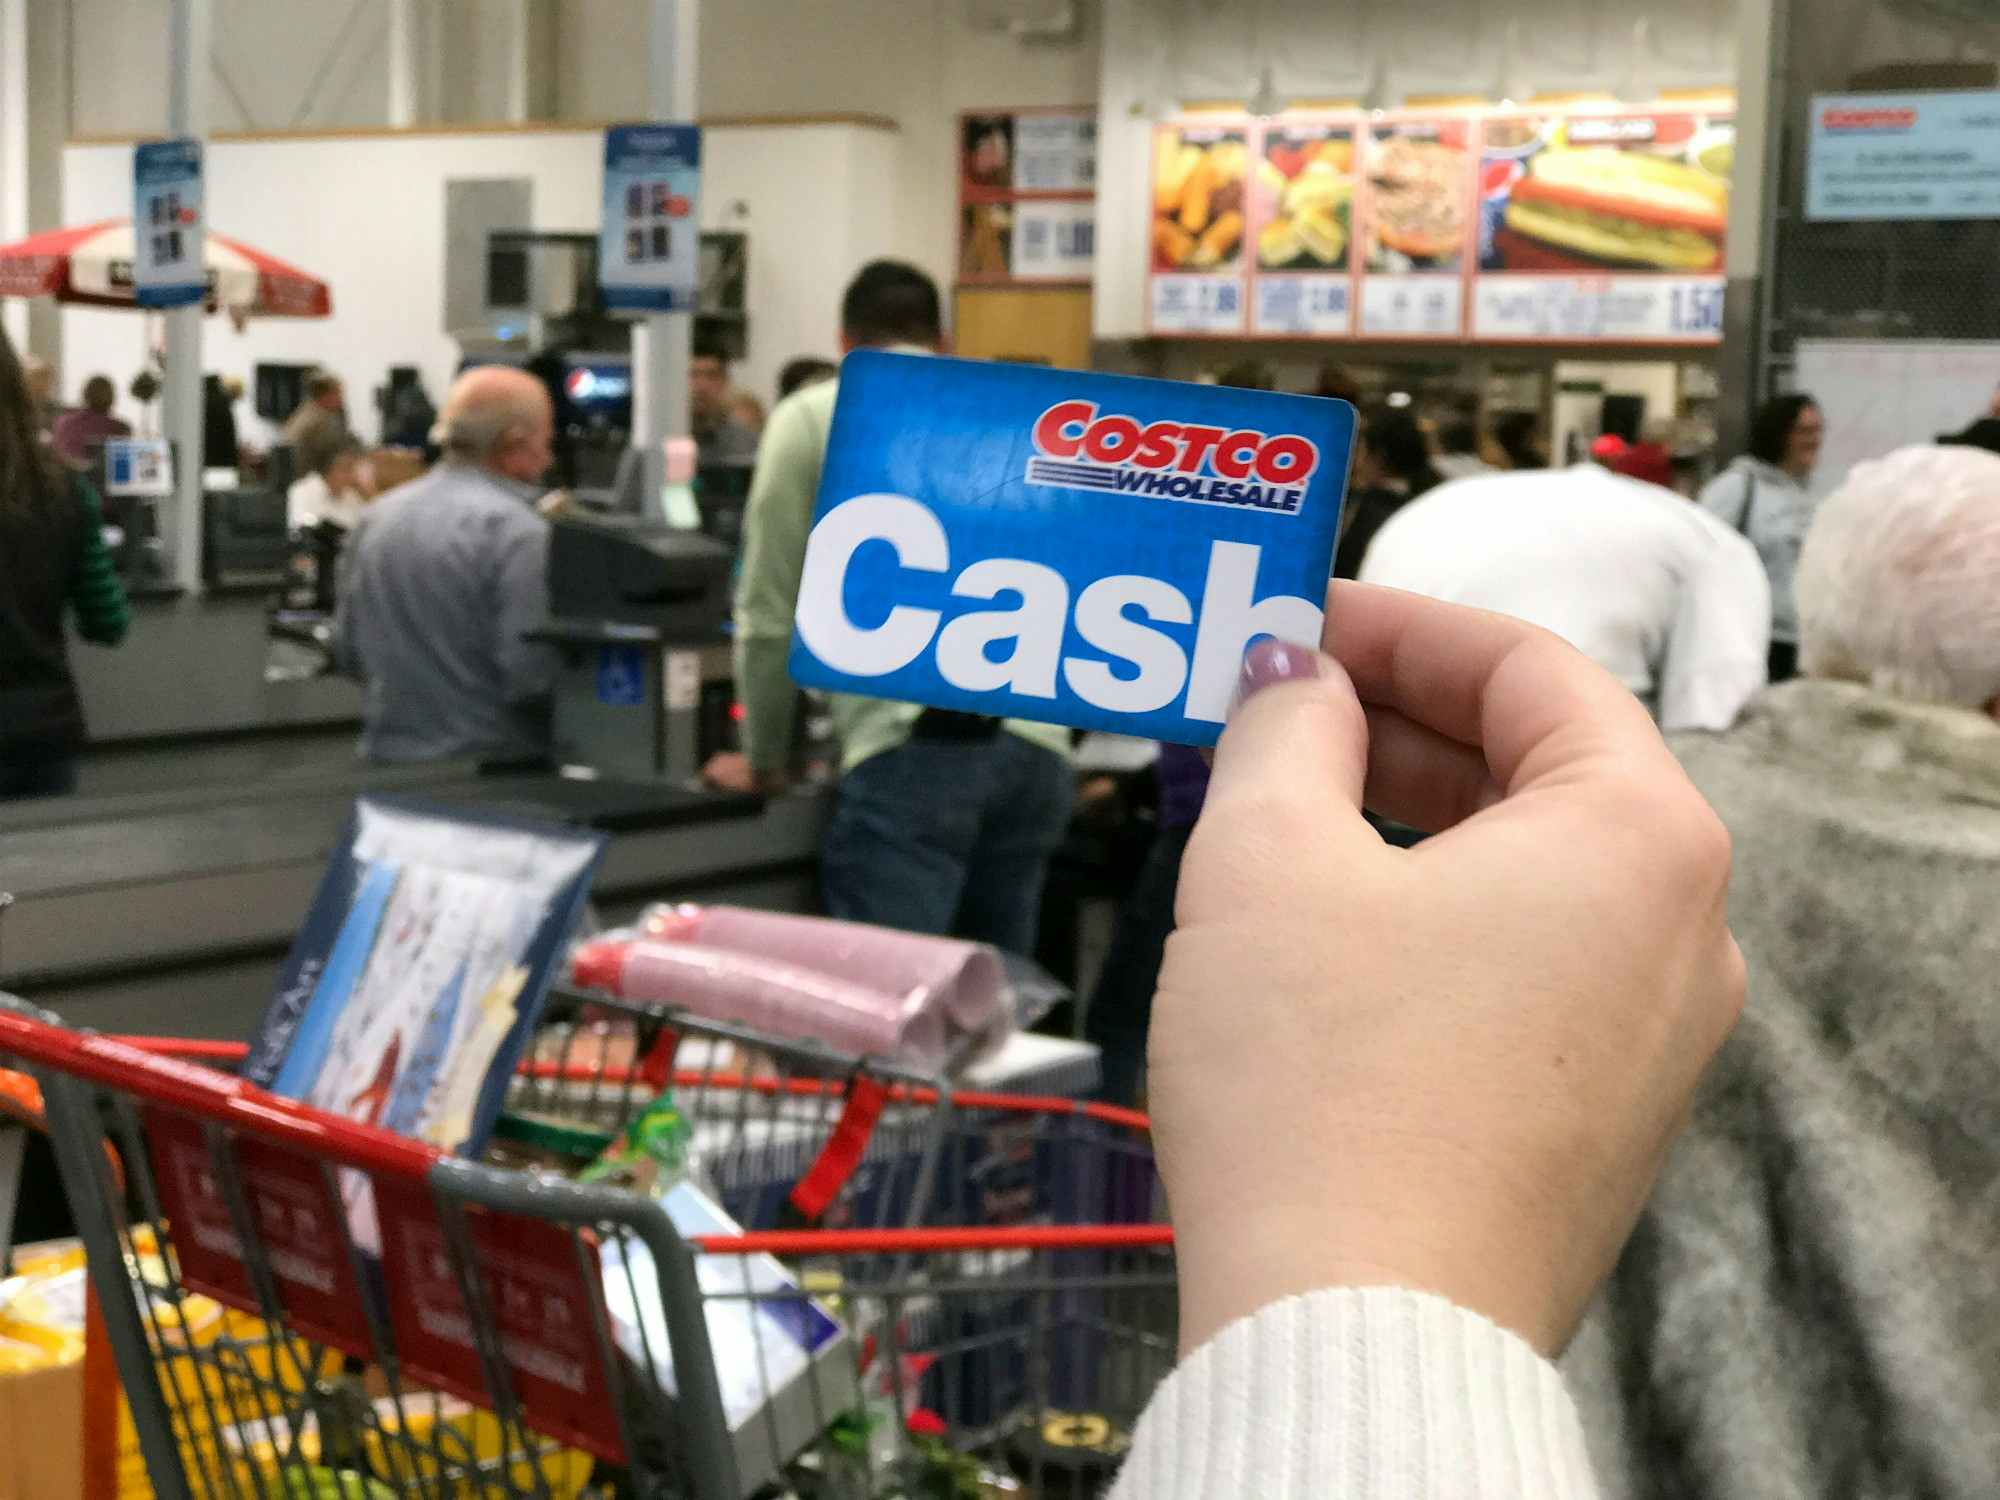 Costco-cash-card-edited